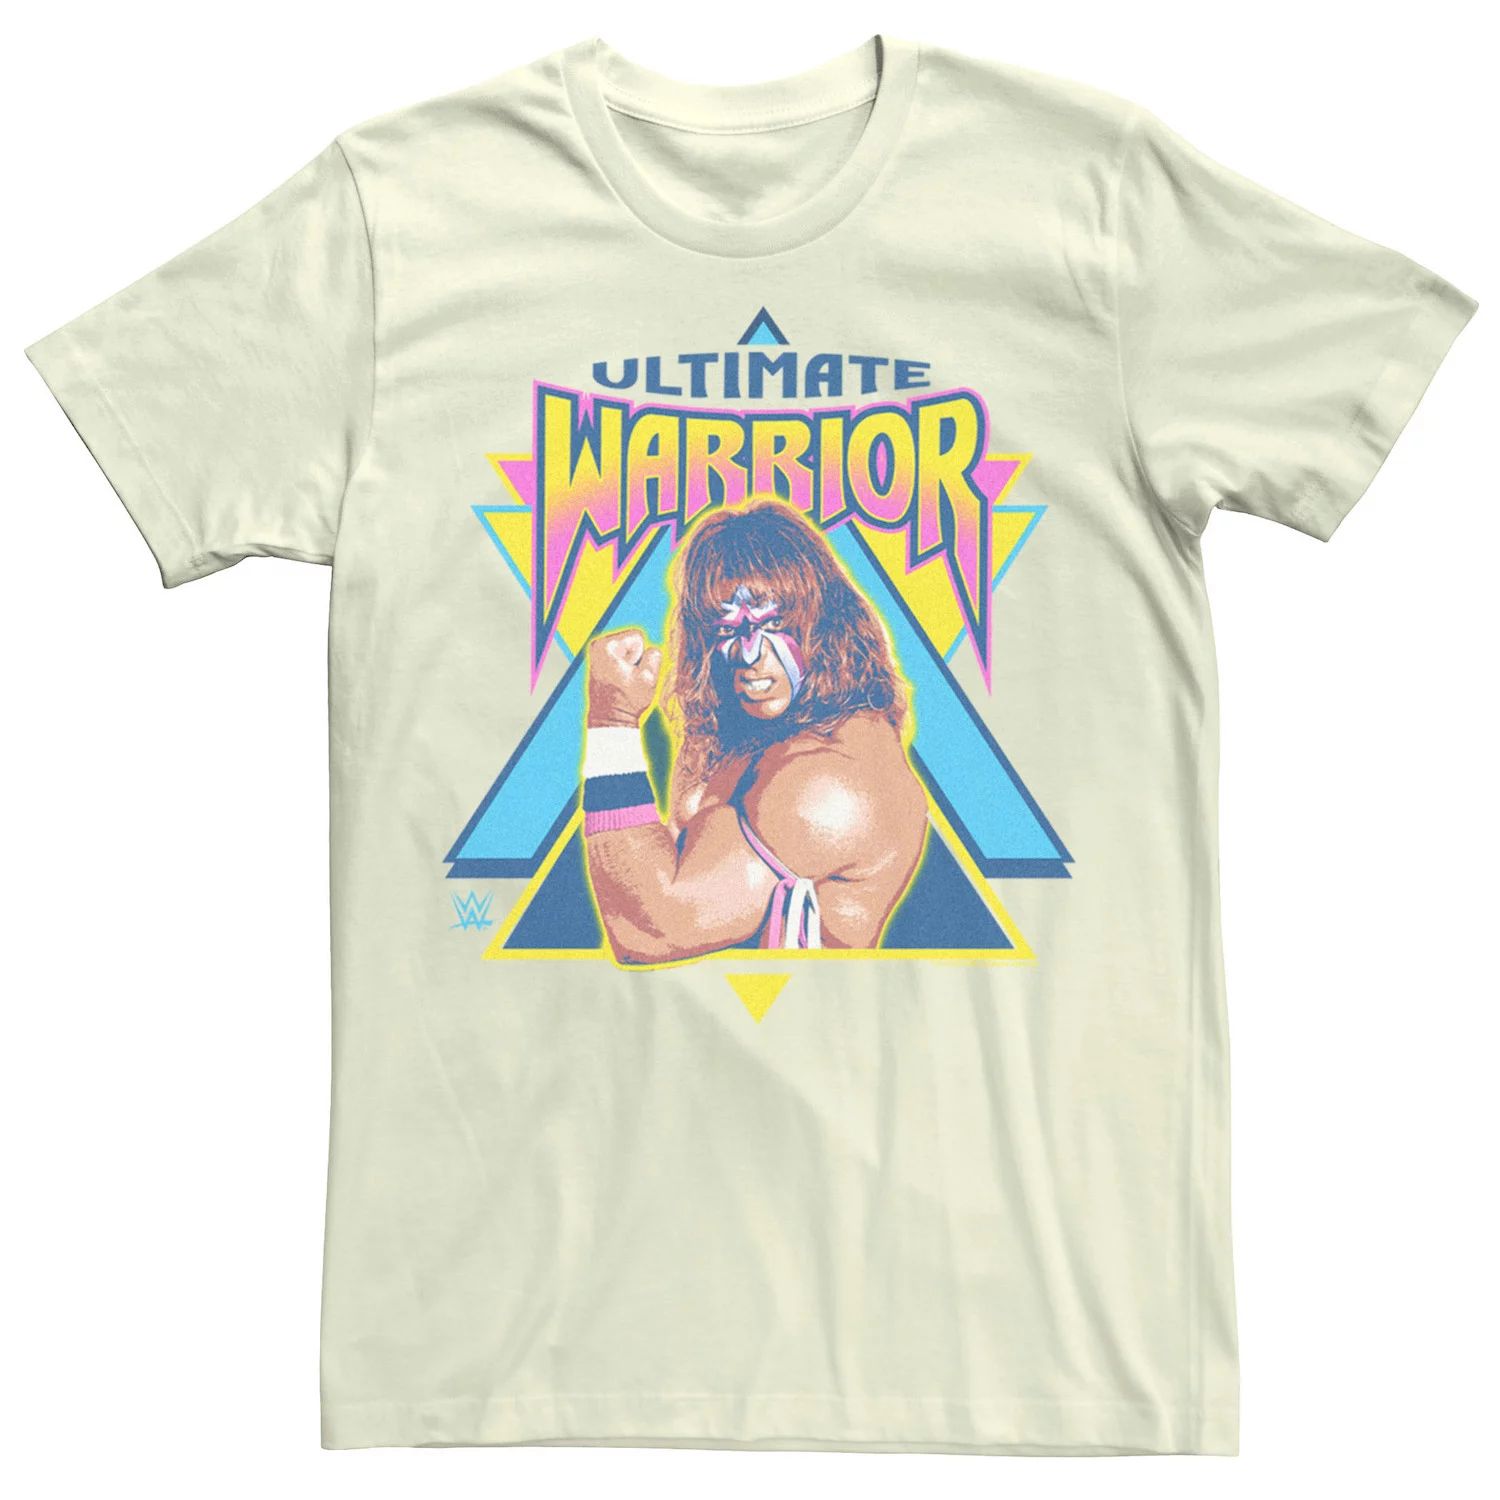 Мужская футболка с треугольным логотипом WWE Ultimate Warrior Licensed Character